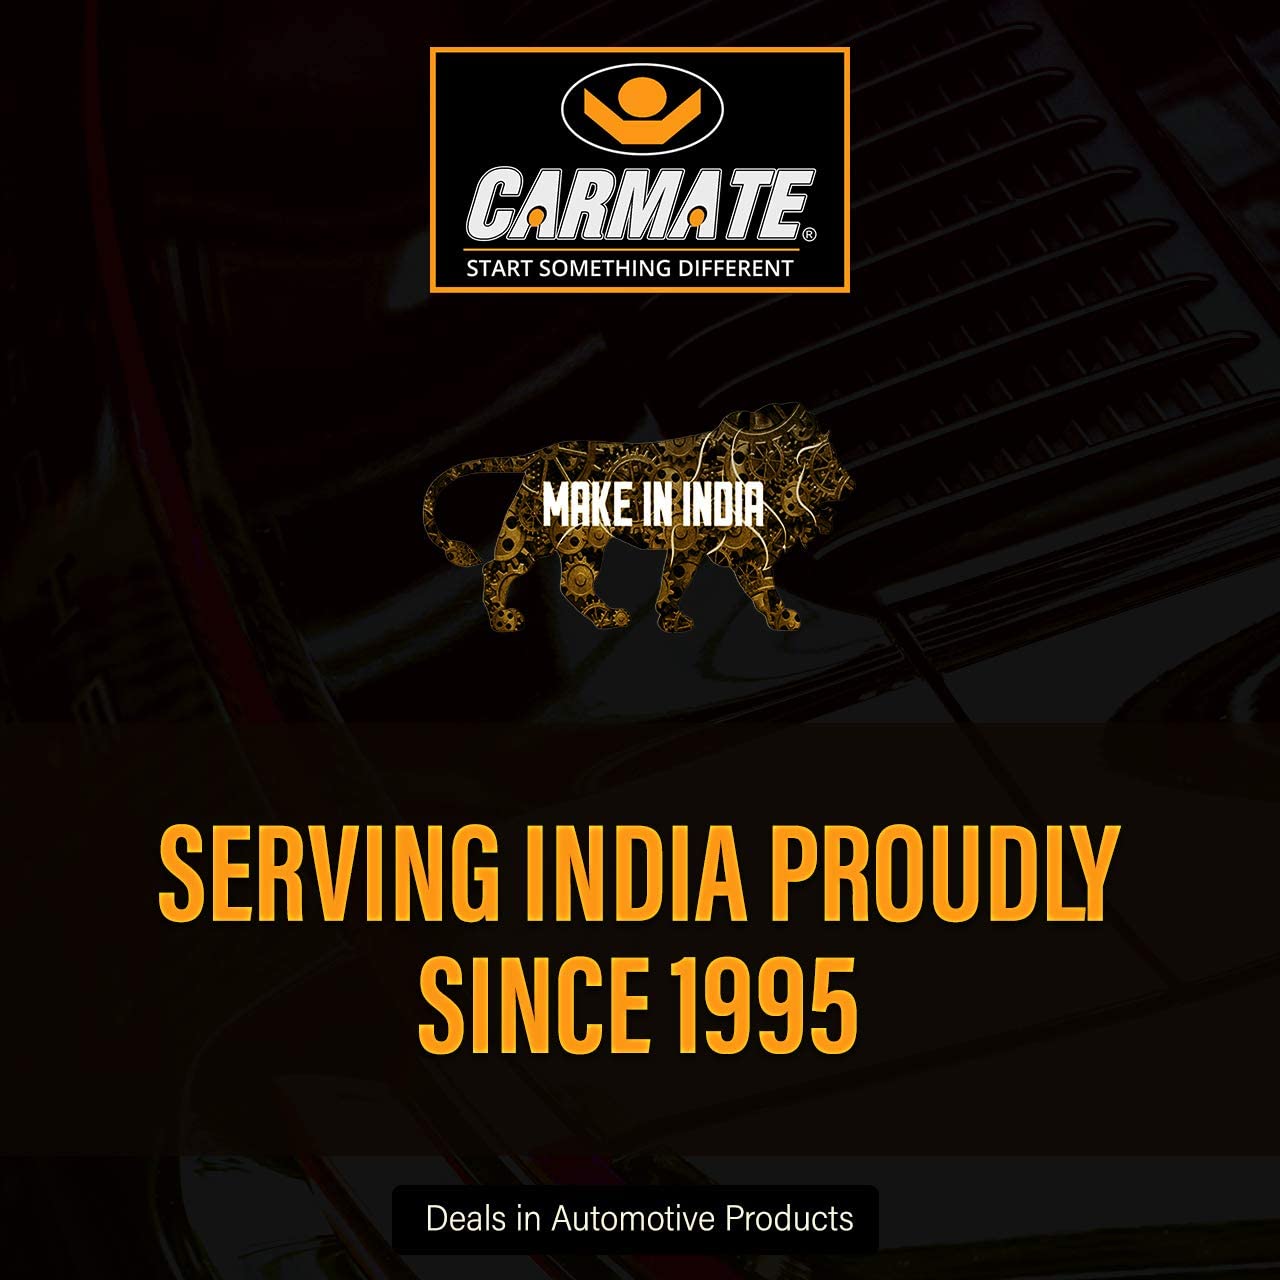 Carmate ECO Car Body Cover (Grey) for Mahindra - TUV 300 - CARMATE®